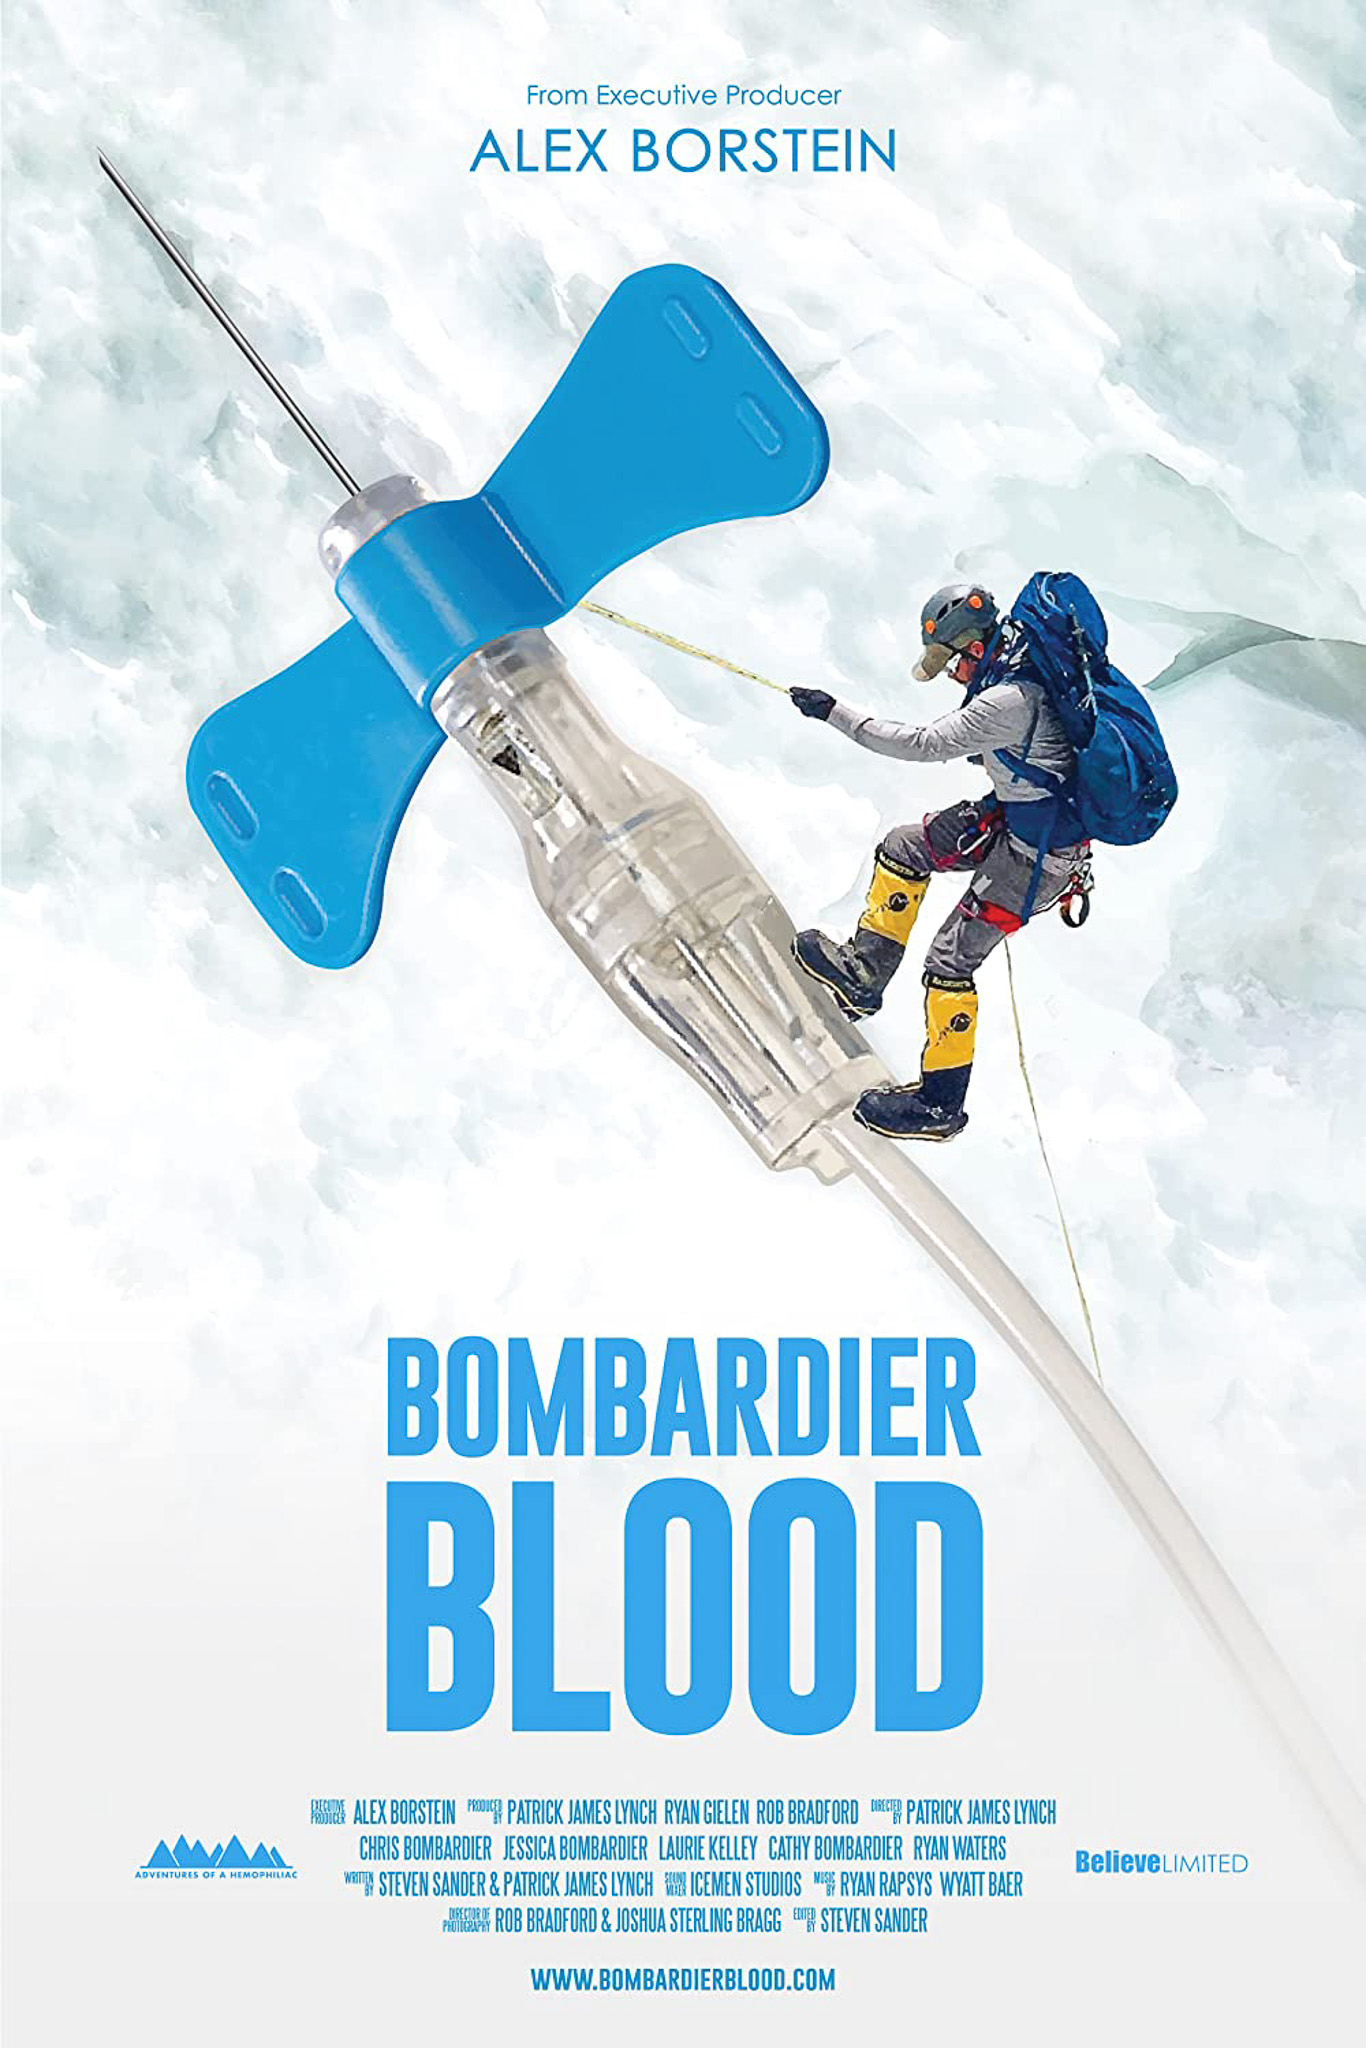 Bombardier Blood